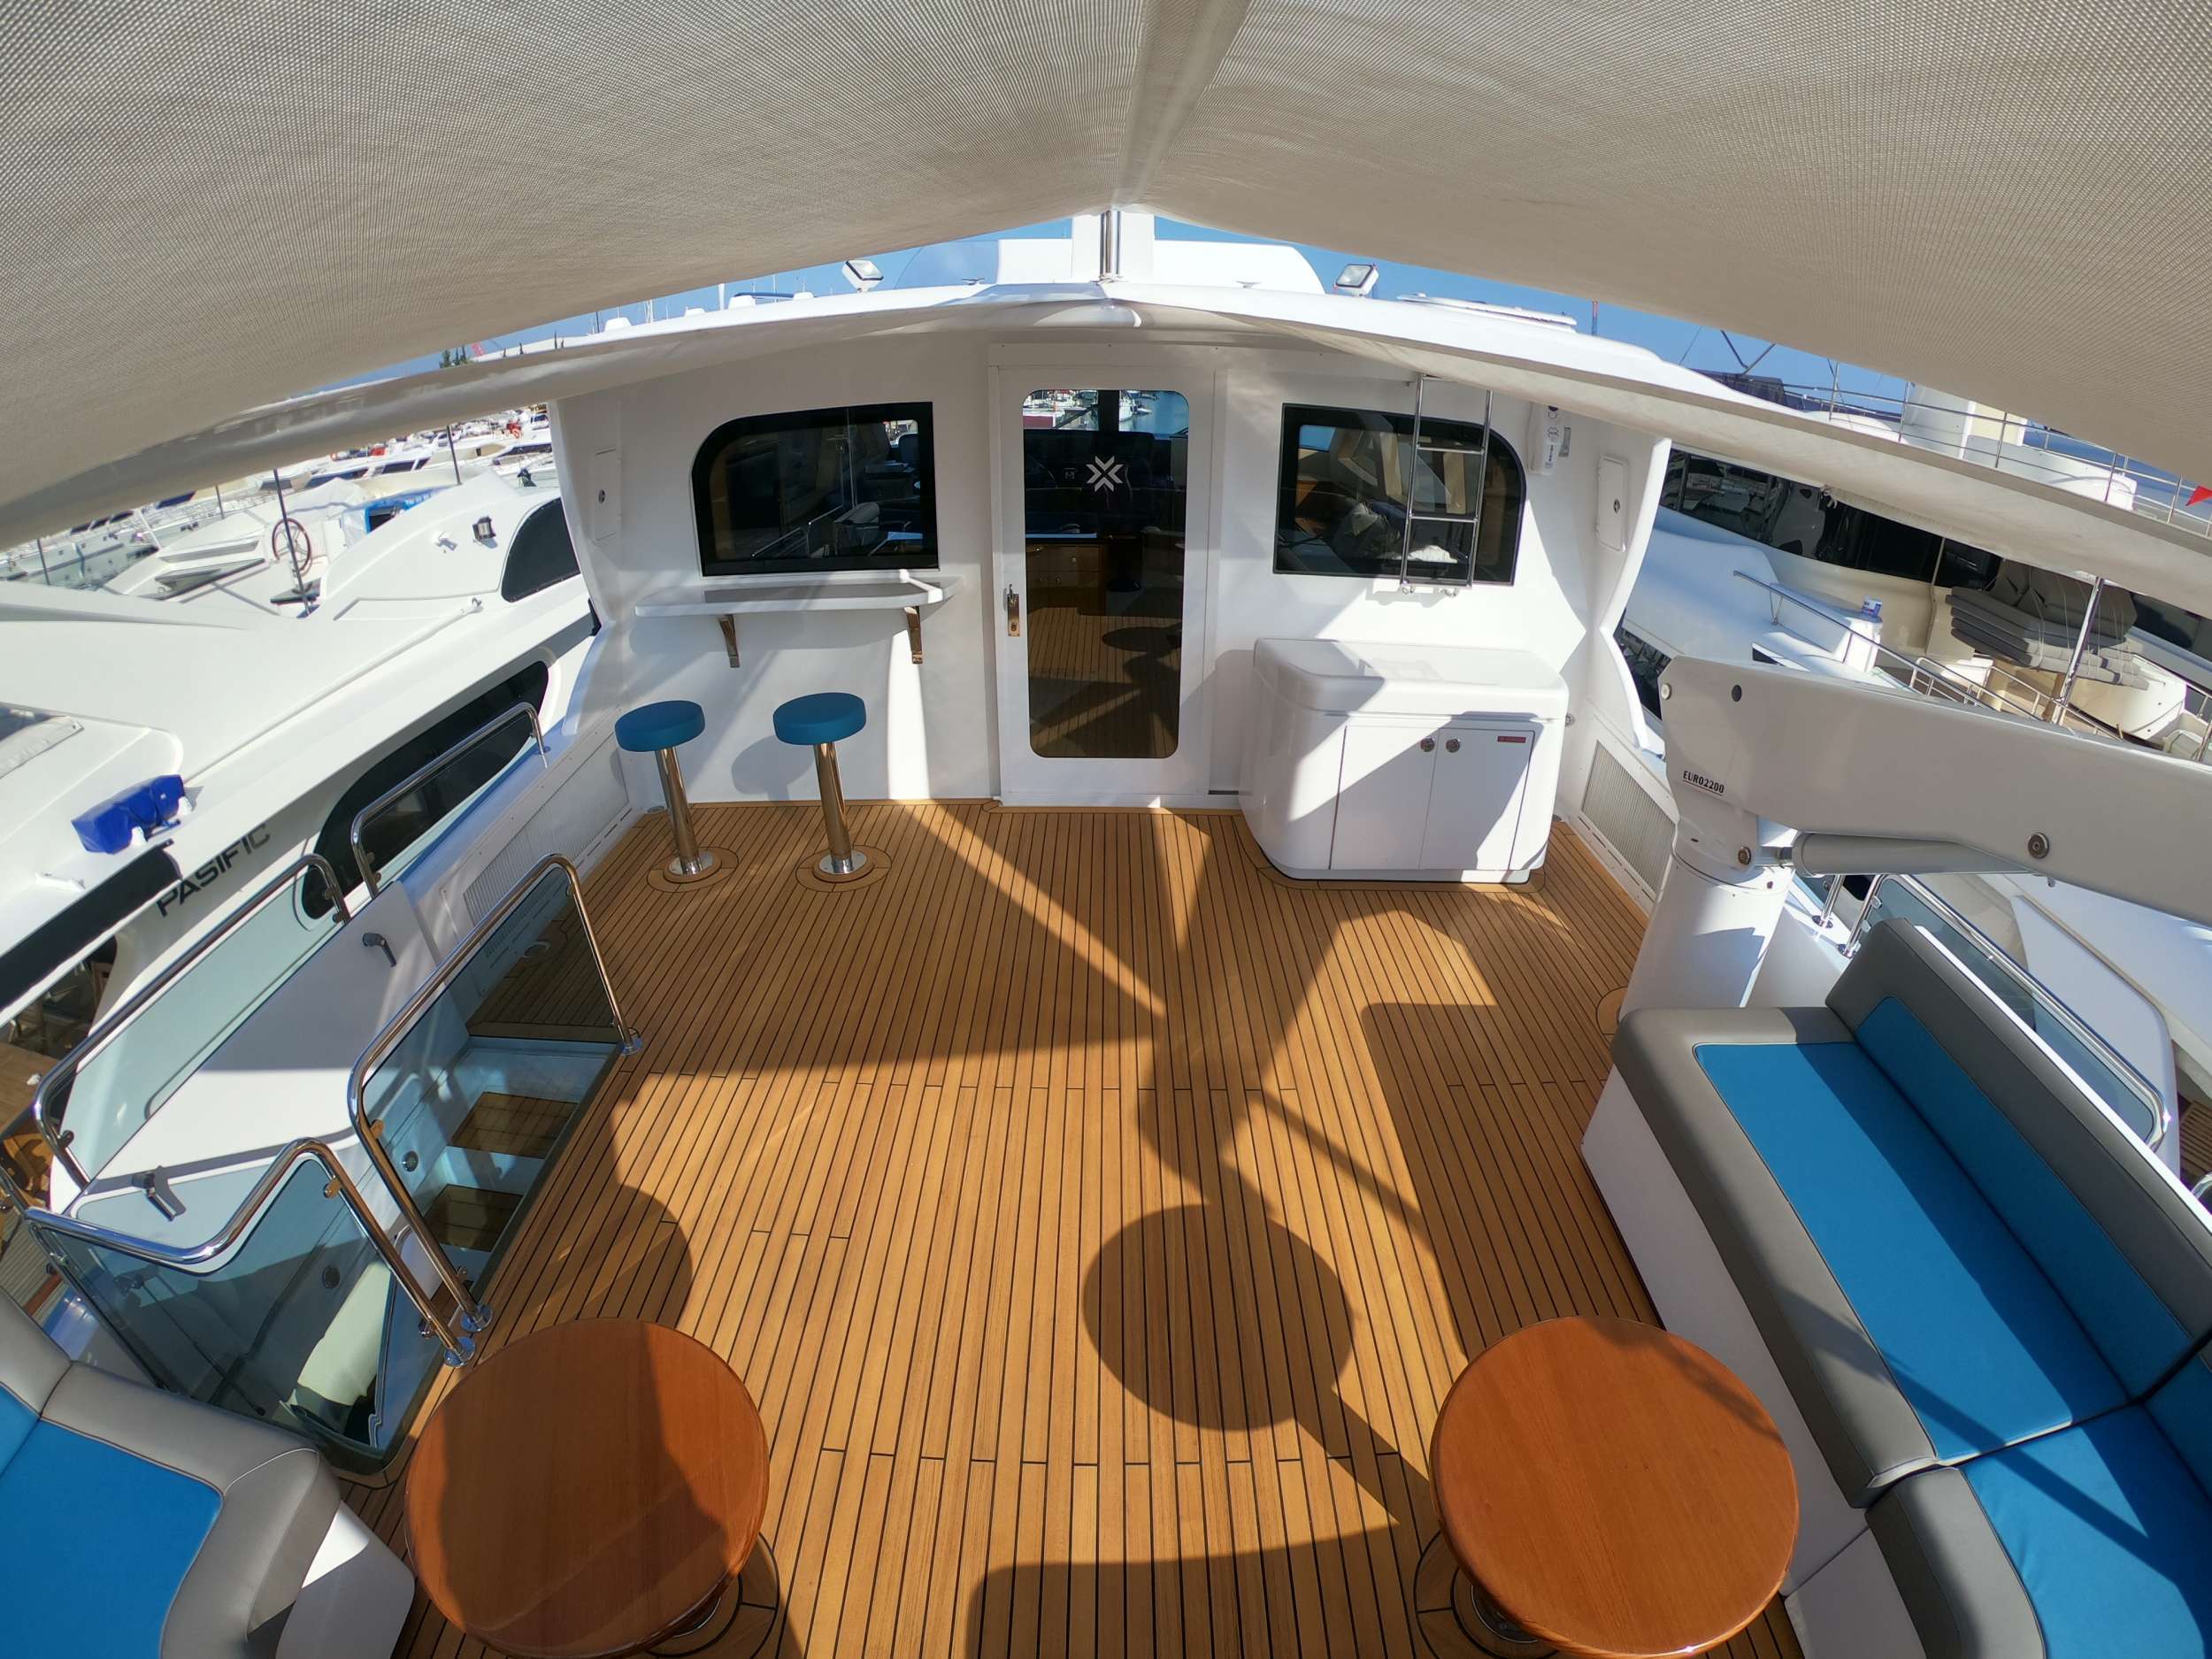 TOP SHELF - Luxury yacht charter British Virgin Islands & Boat hire in Caribbean 6